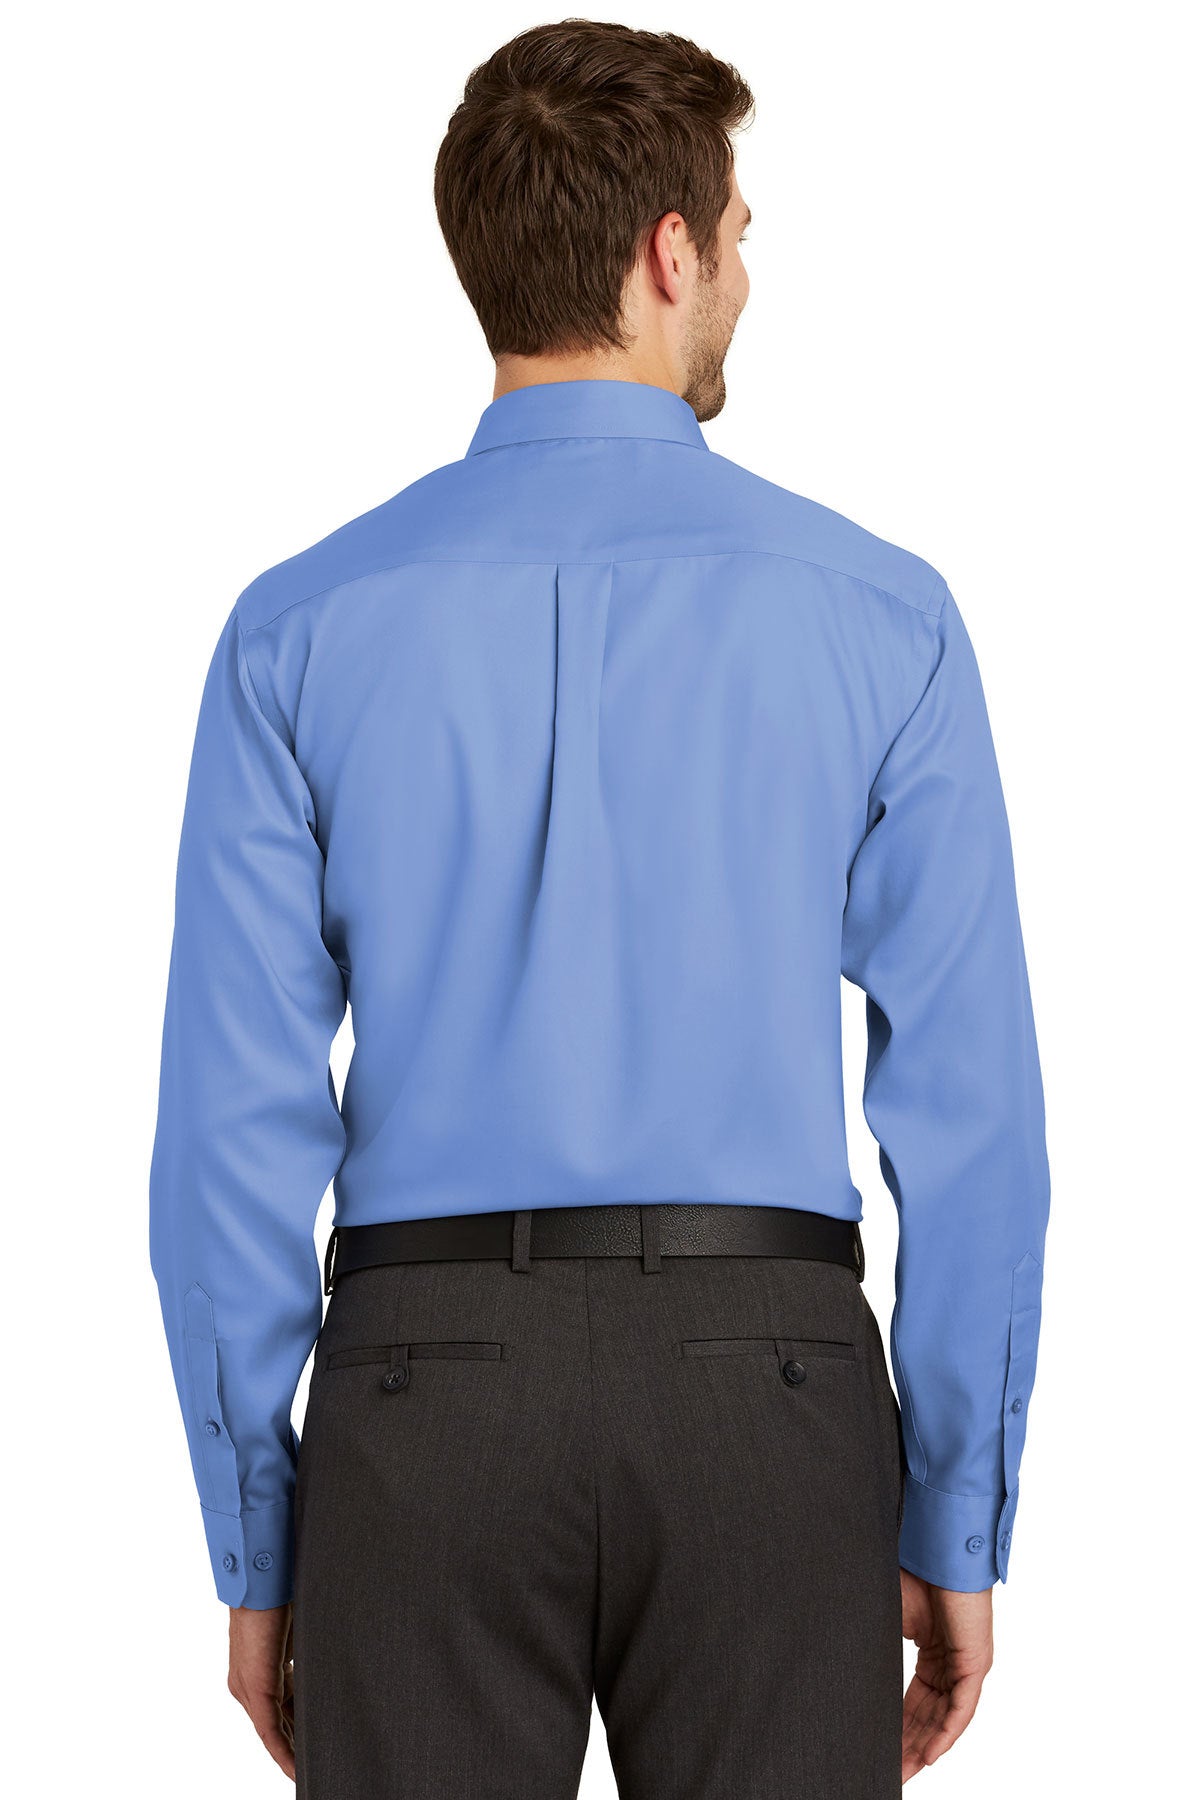 Port Authority Non-Iron Twill Shirt S638 Ultramarine Blue